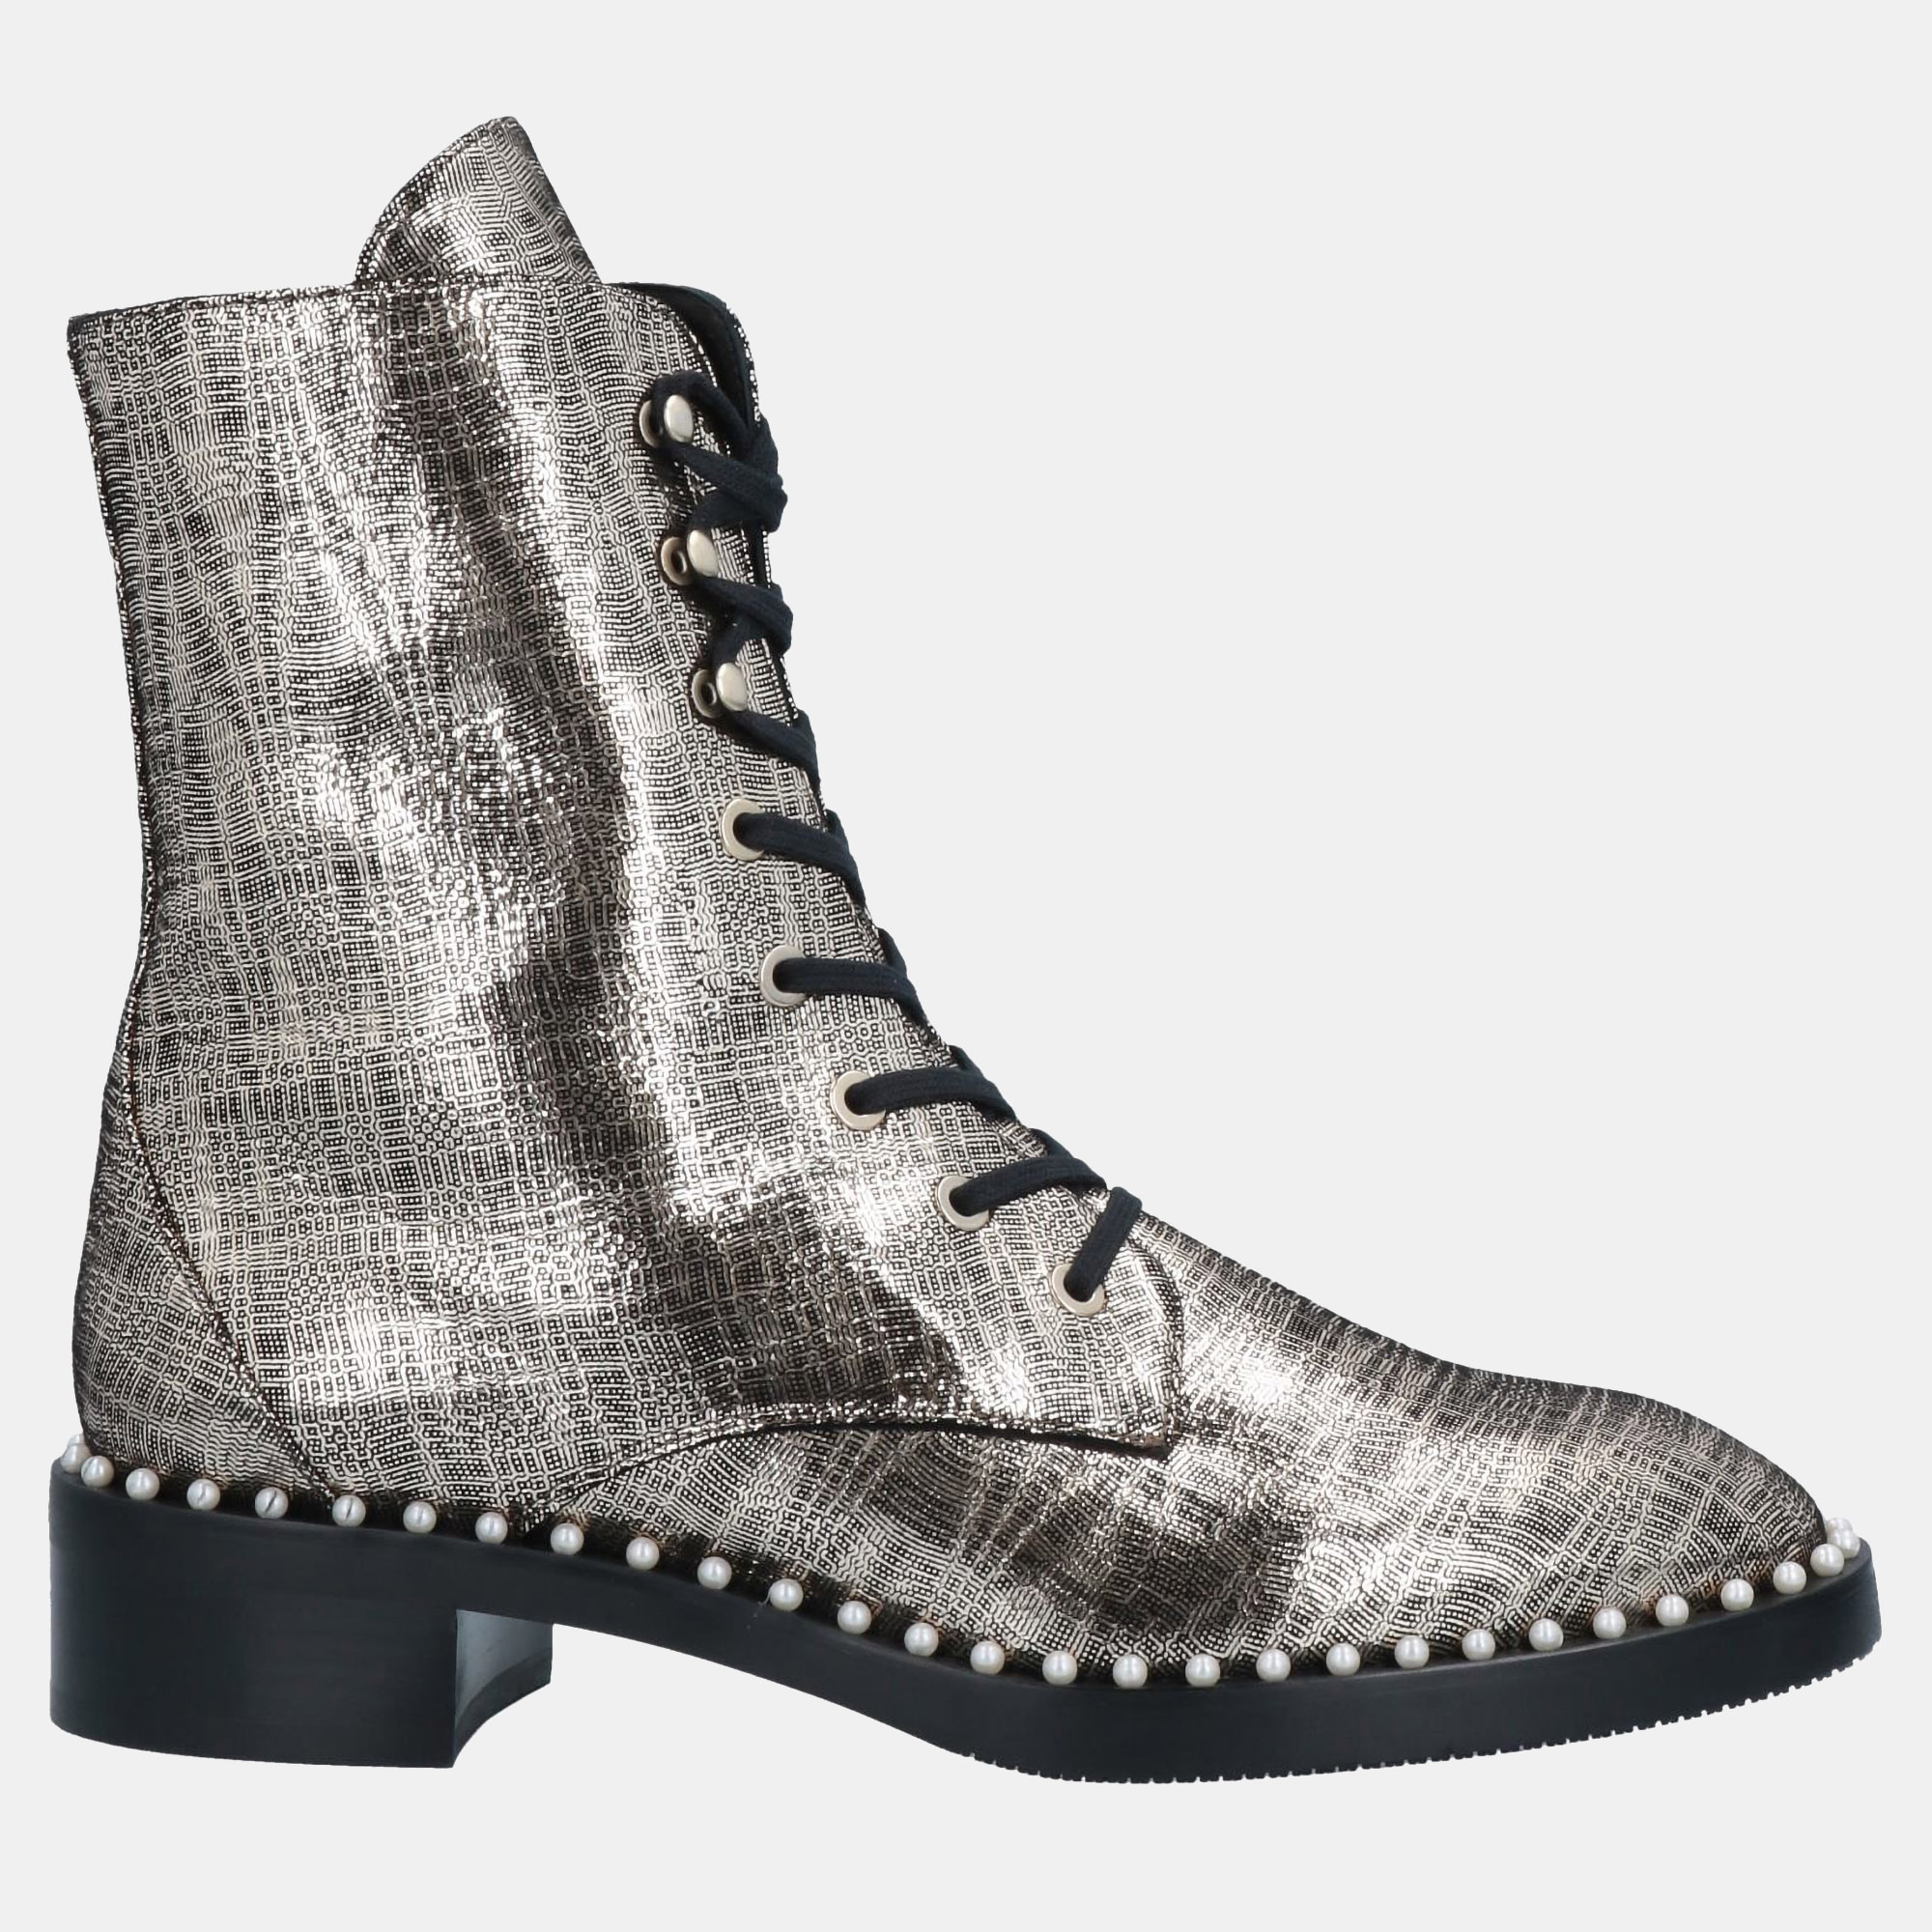 Stuart weitzman lurex fabric ankle boots size 36